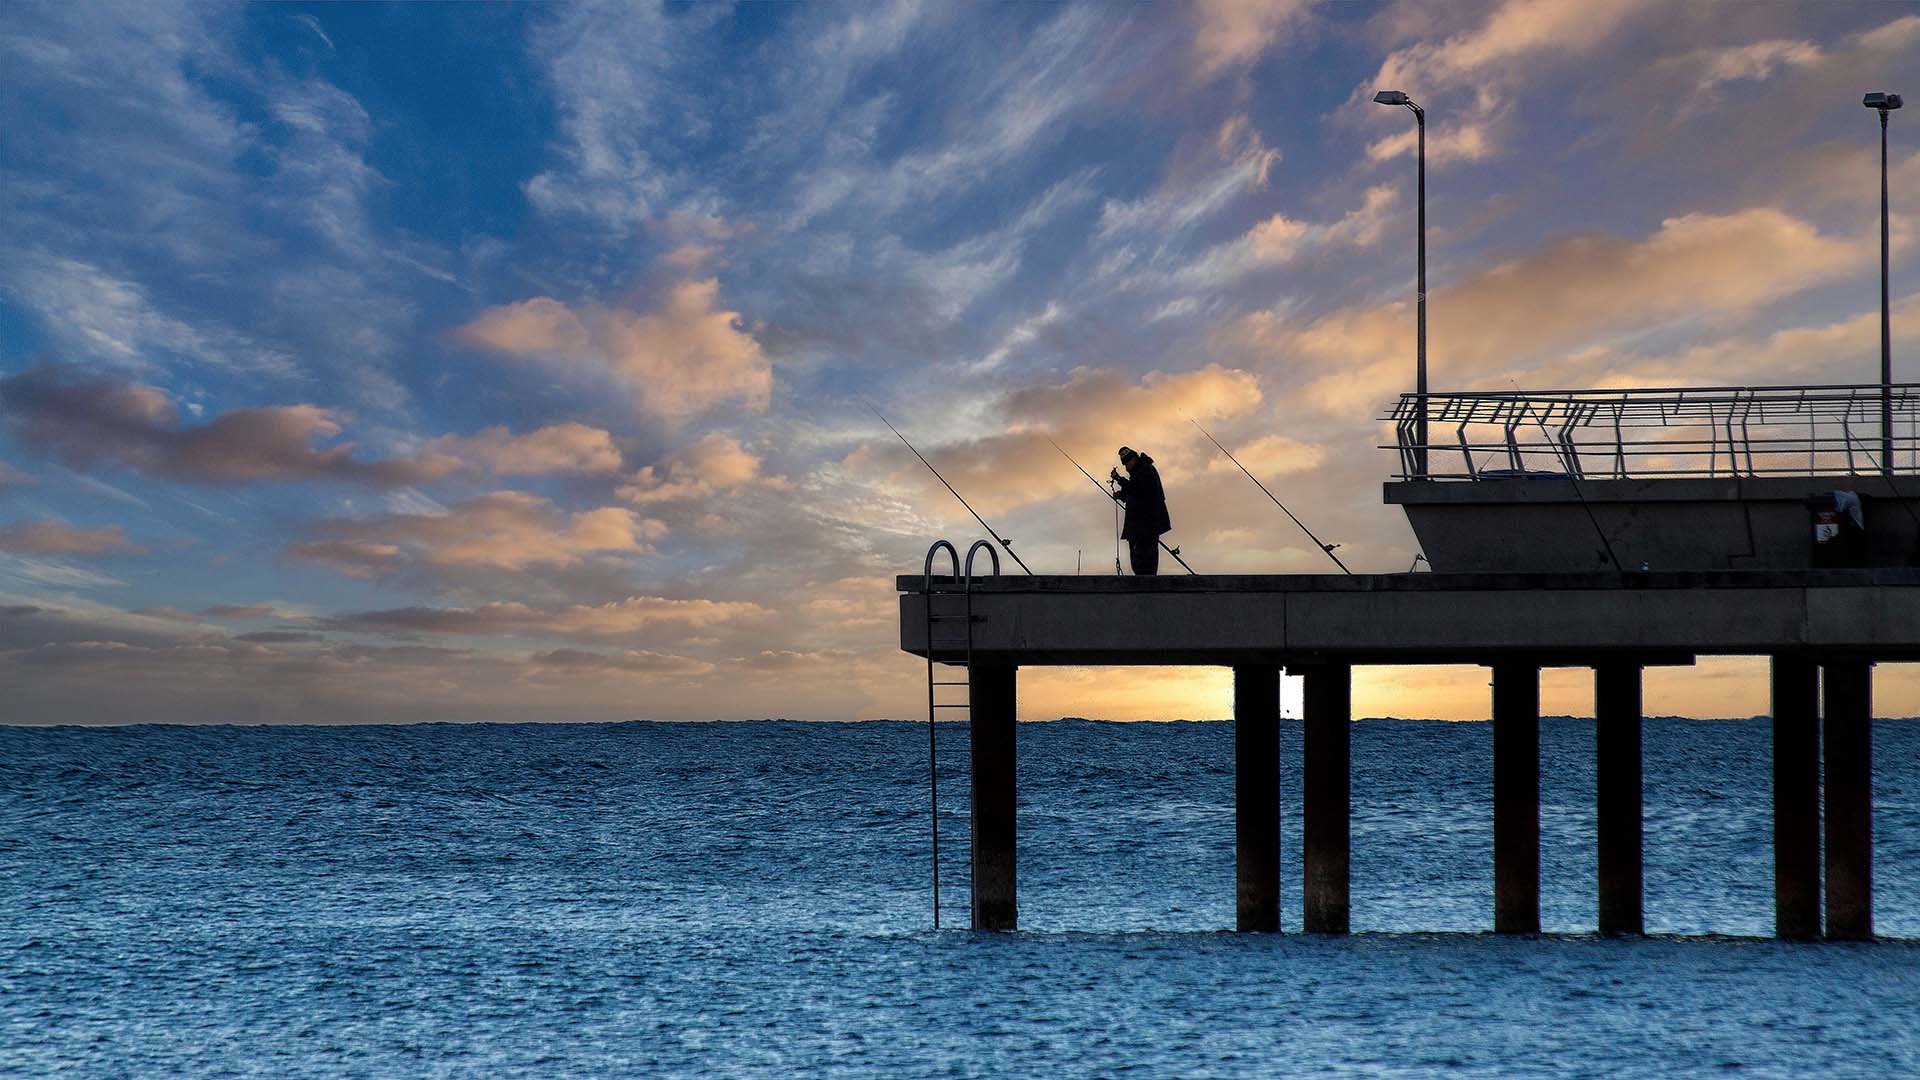 Man fishing at the pier during sunset